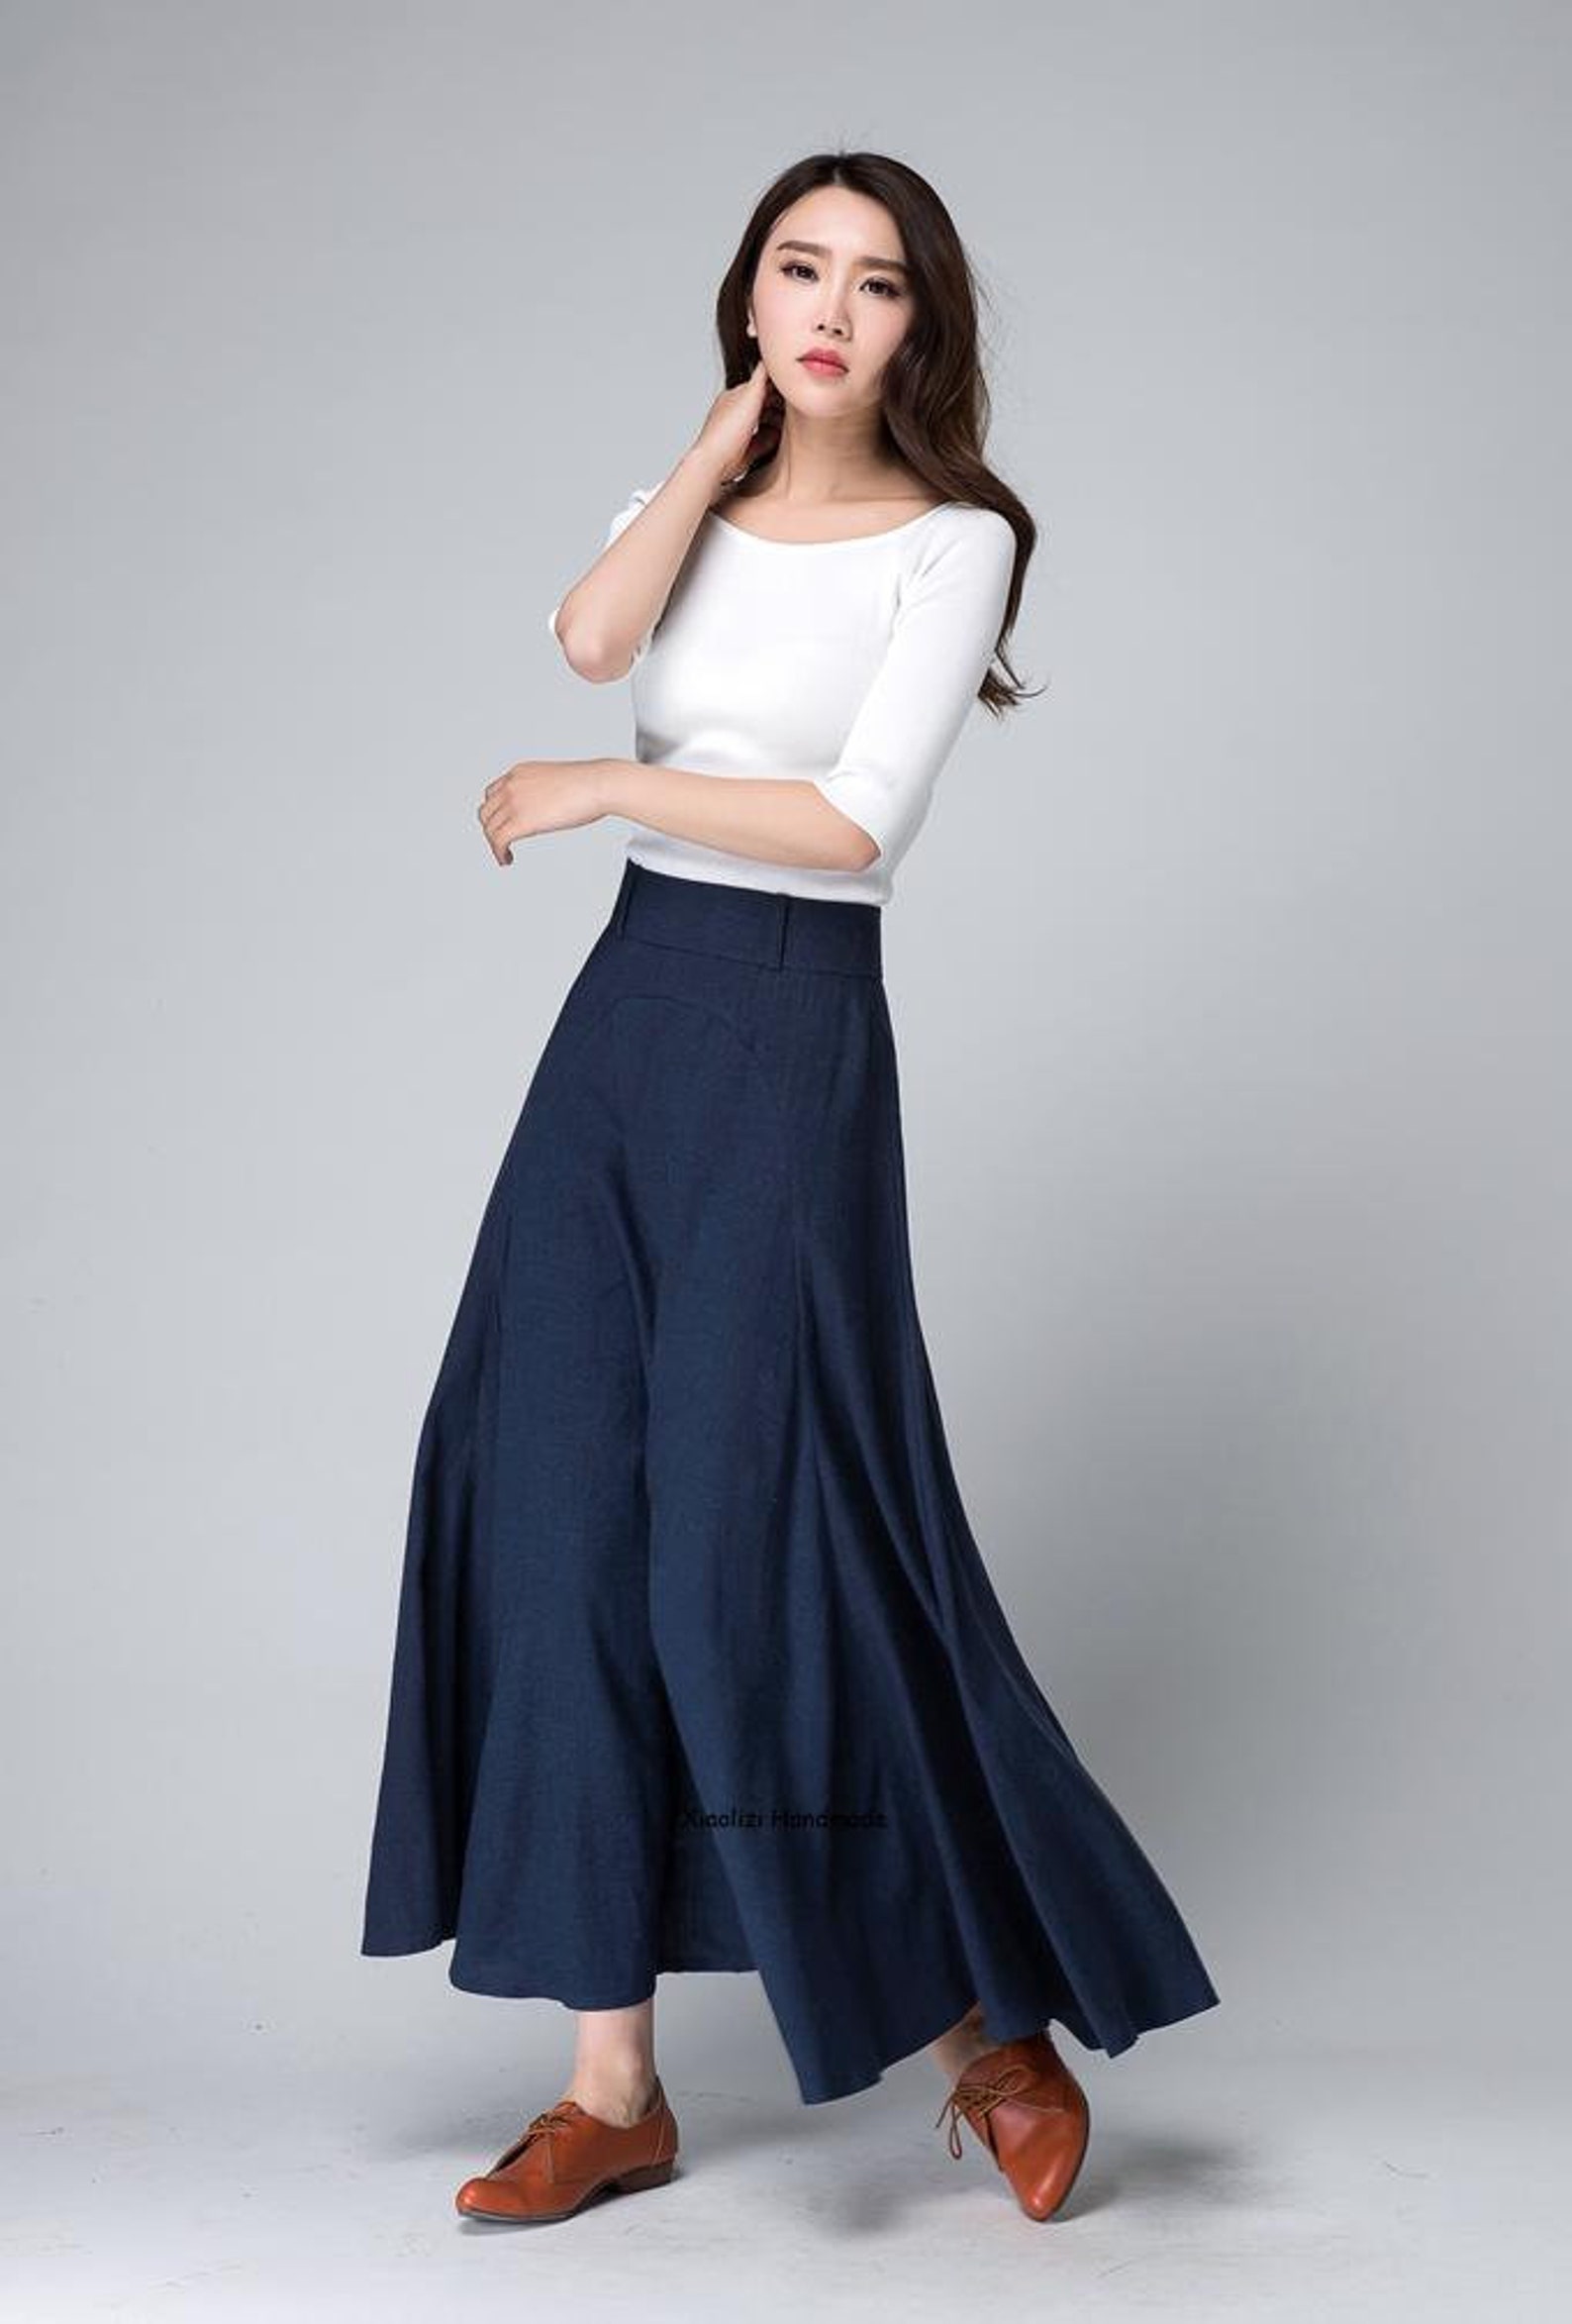 Dark Blue Skirt Linen Skirt Women Linen Maxi Skirt A Line - Etsy